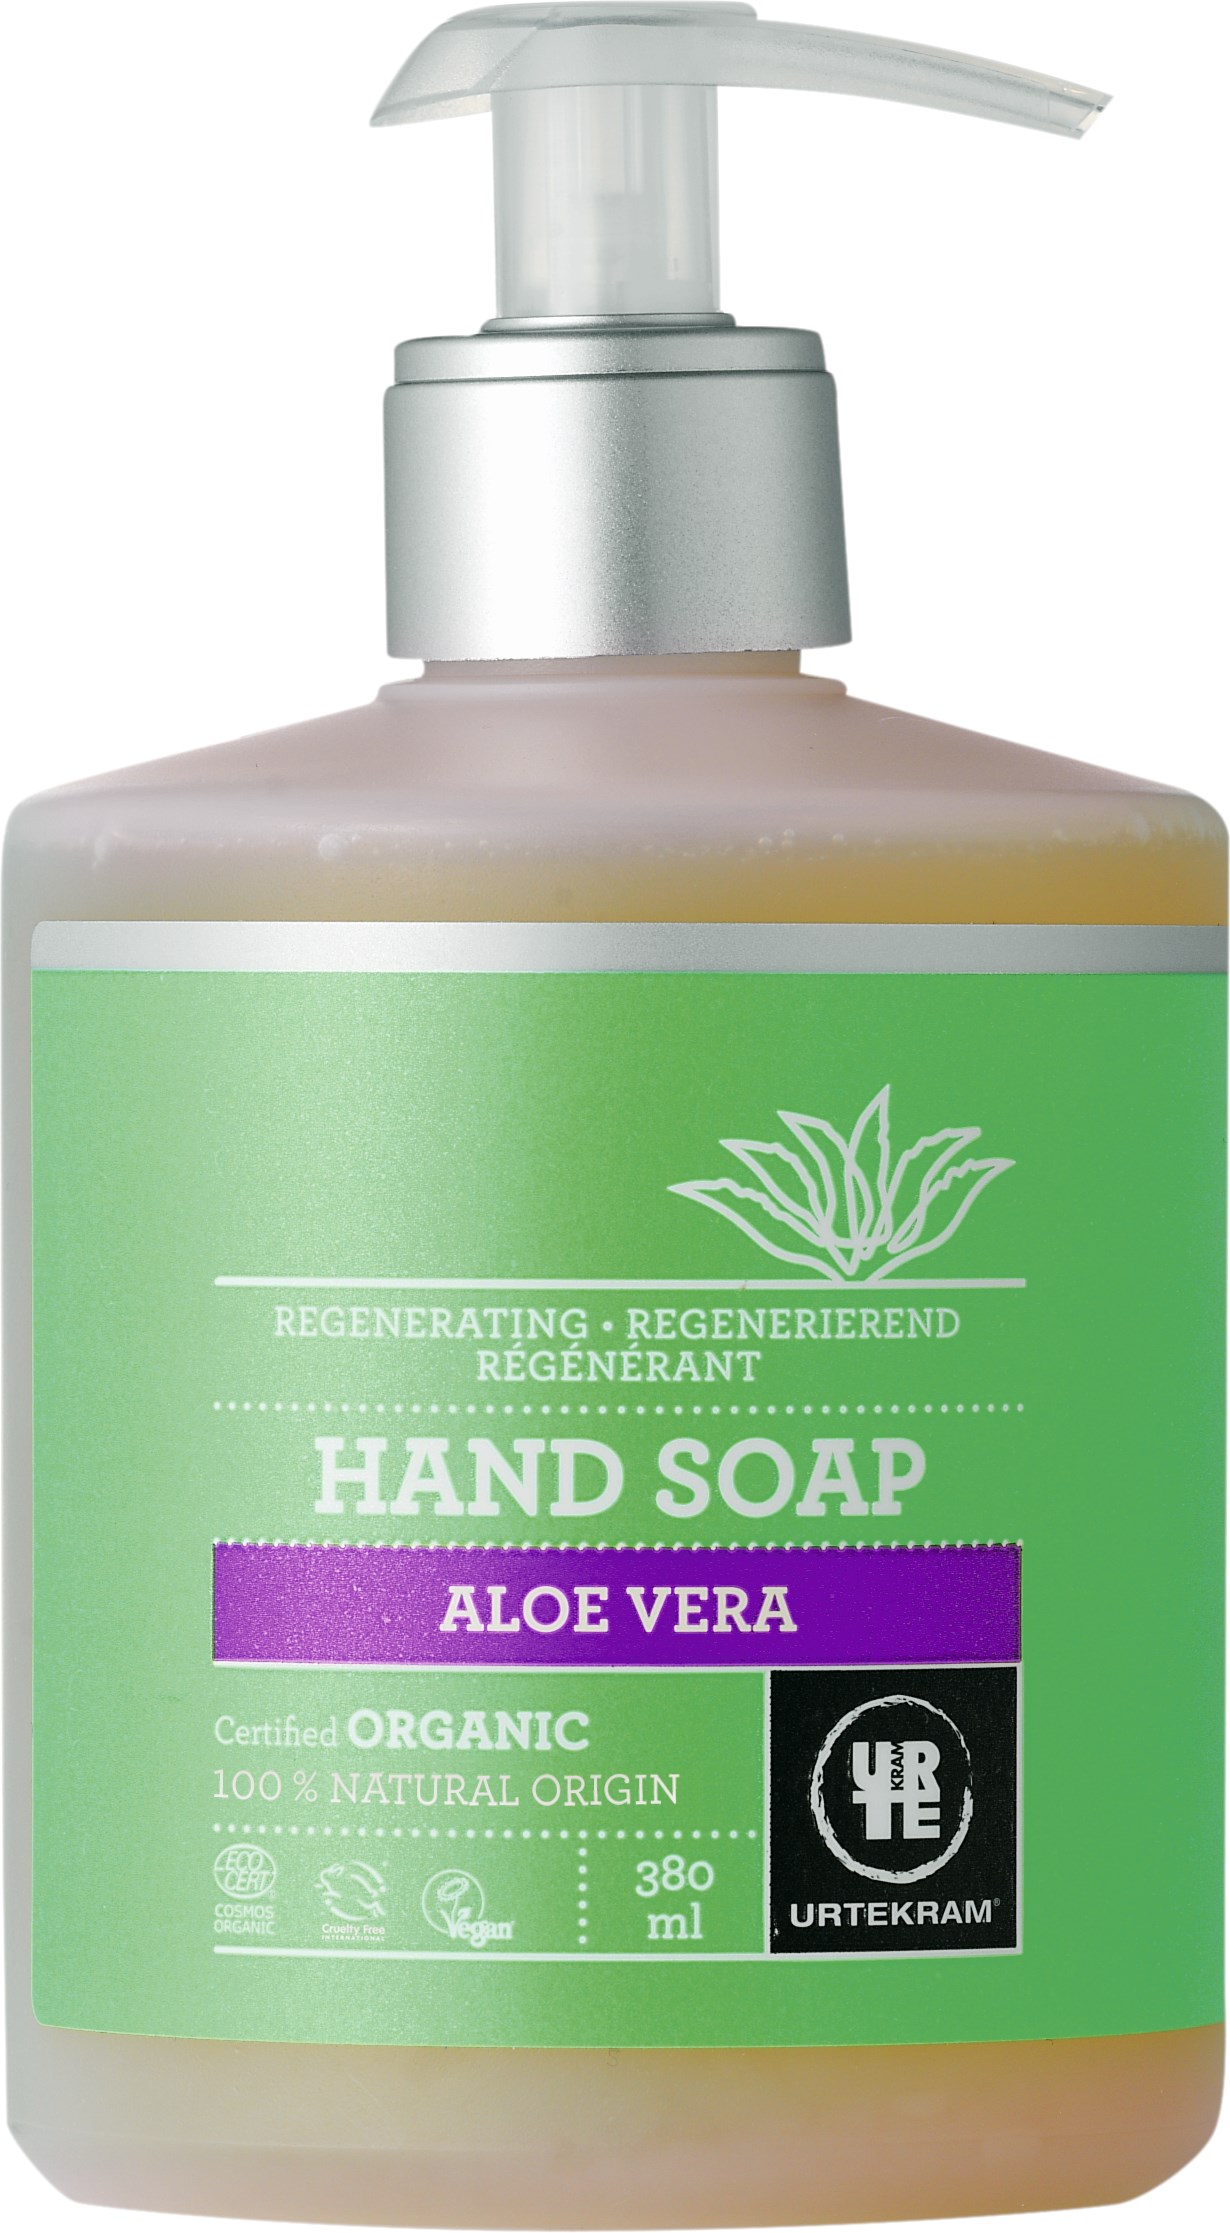 Urtekram Aloe Vera Hand Soap 380ml